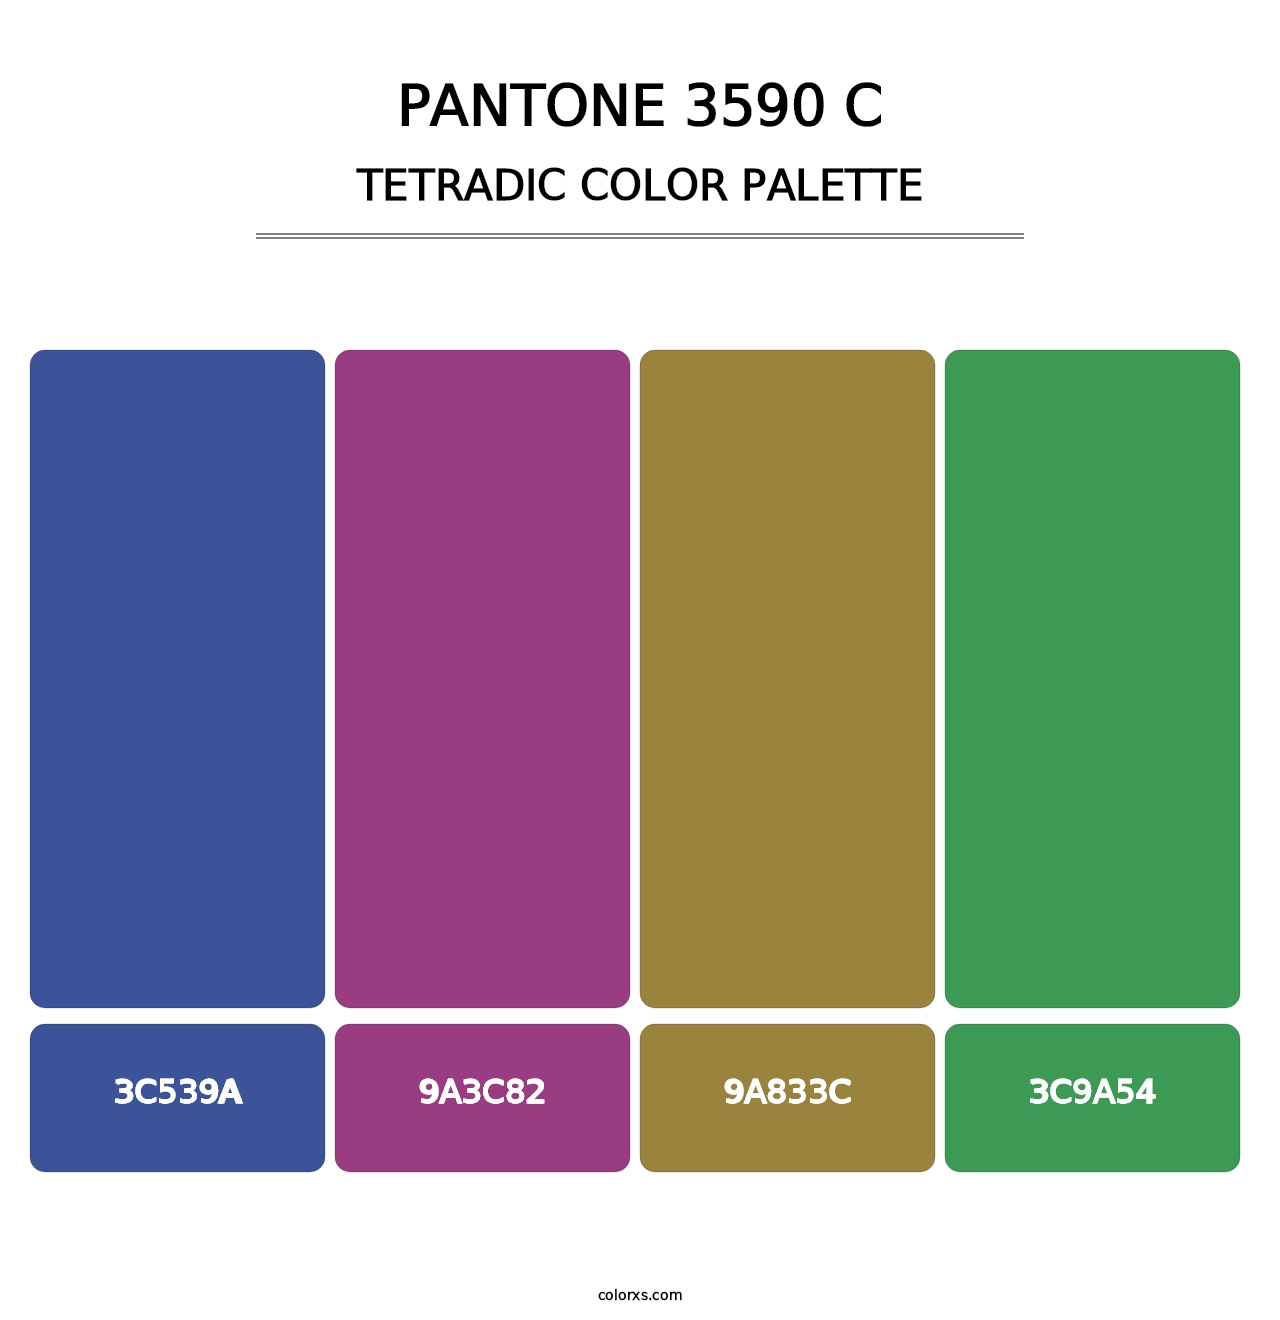 PANTONE 3590 C - Tetradic Color Palette